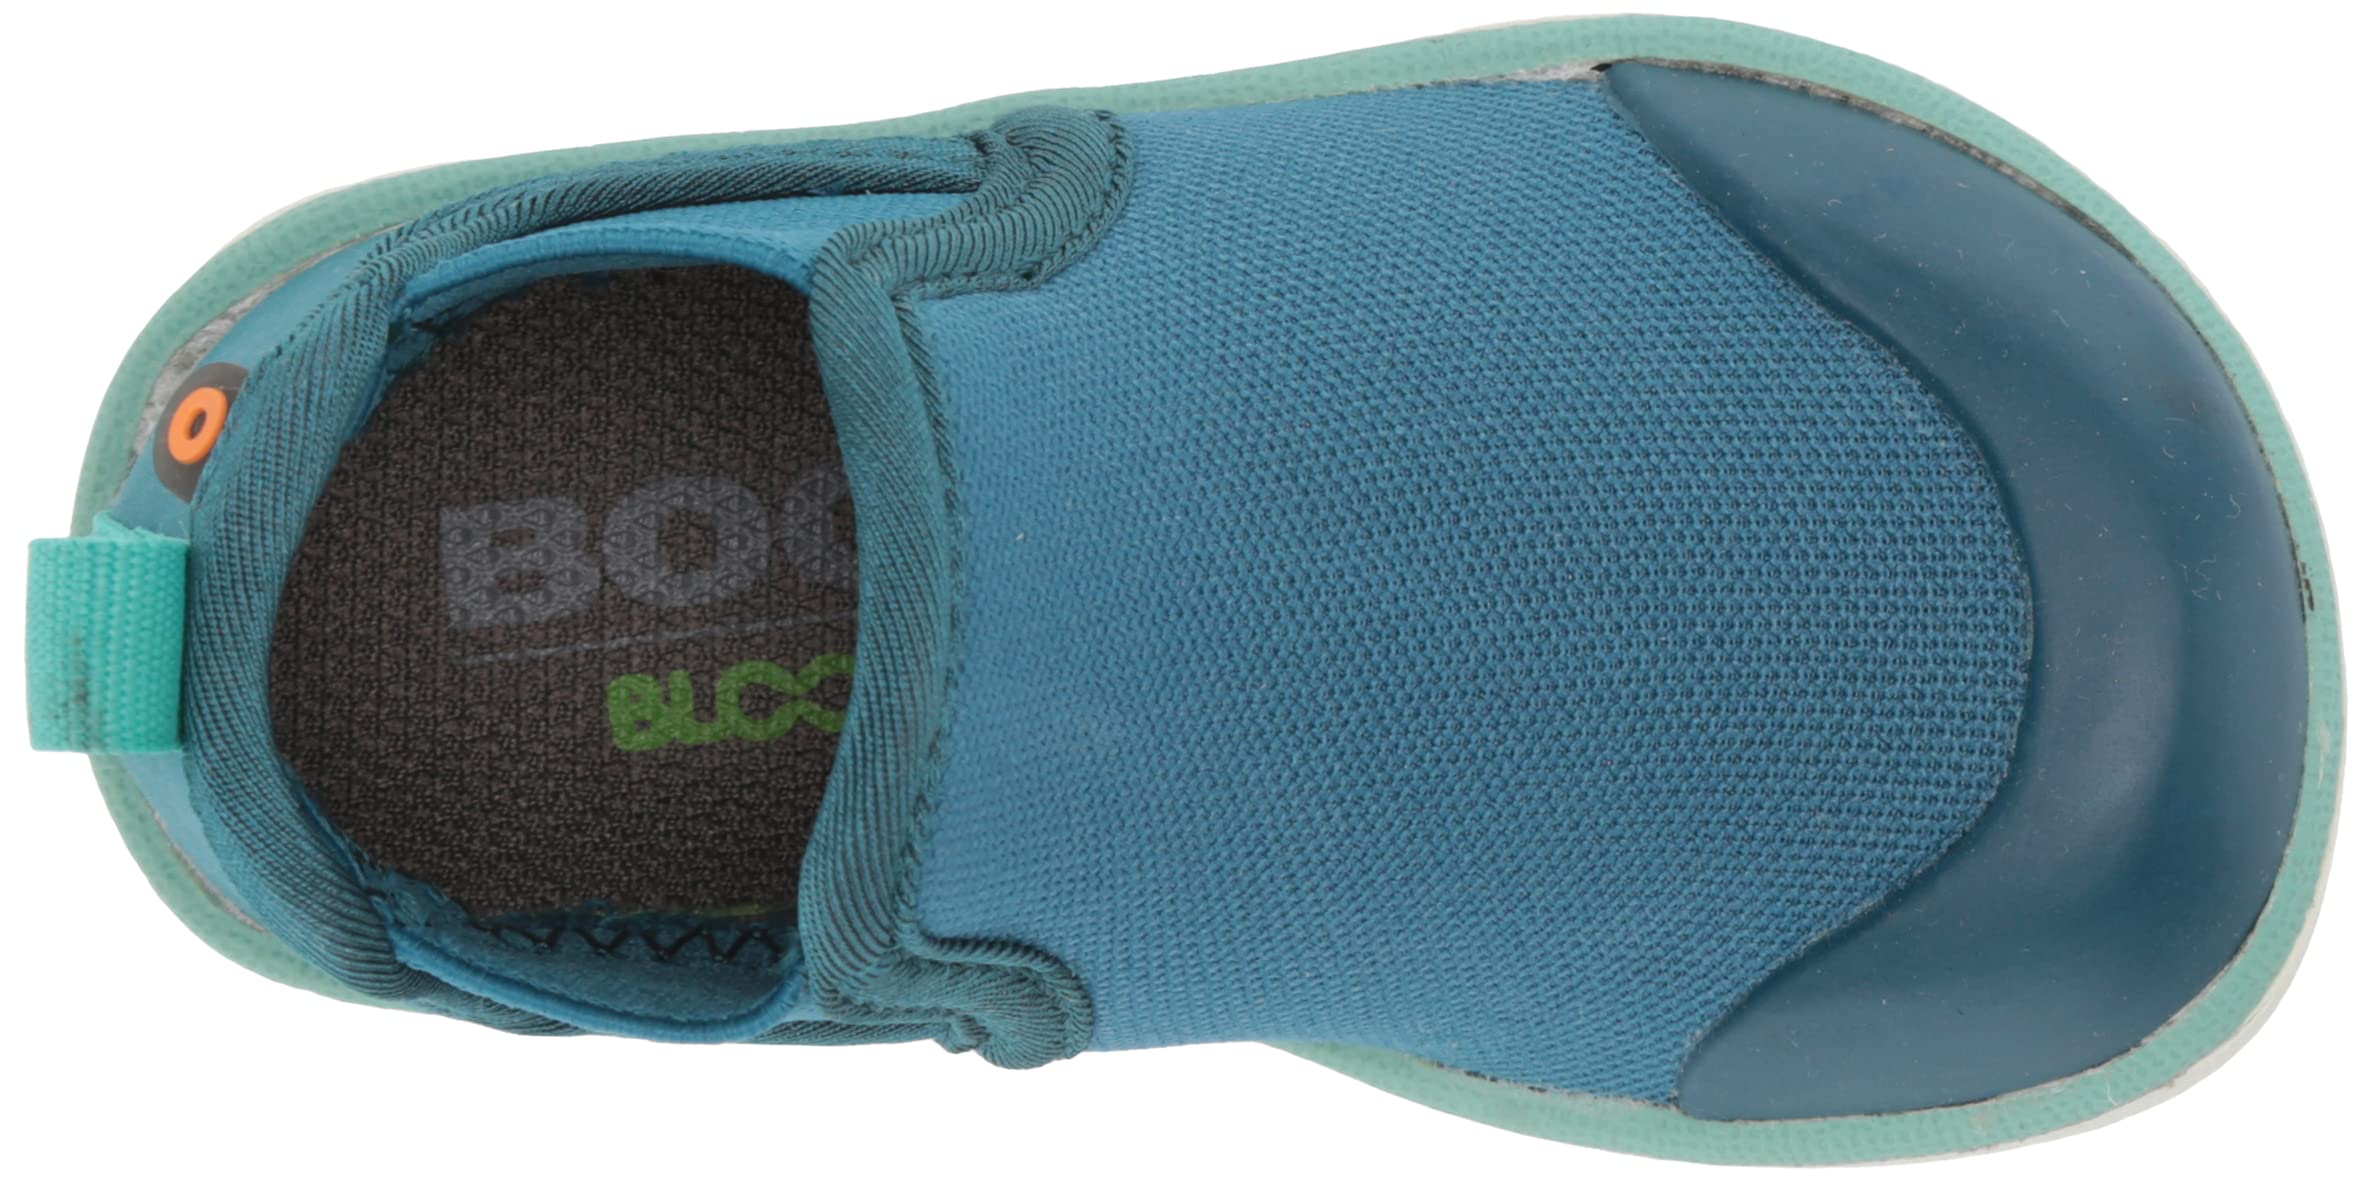 BOGS Unisex-Child Kicker Chelsea Water Resistant Rain Boot